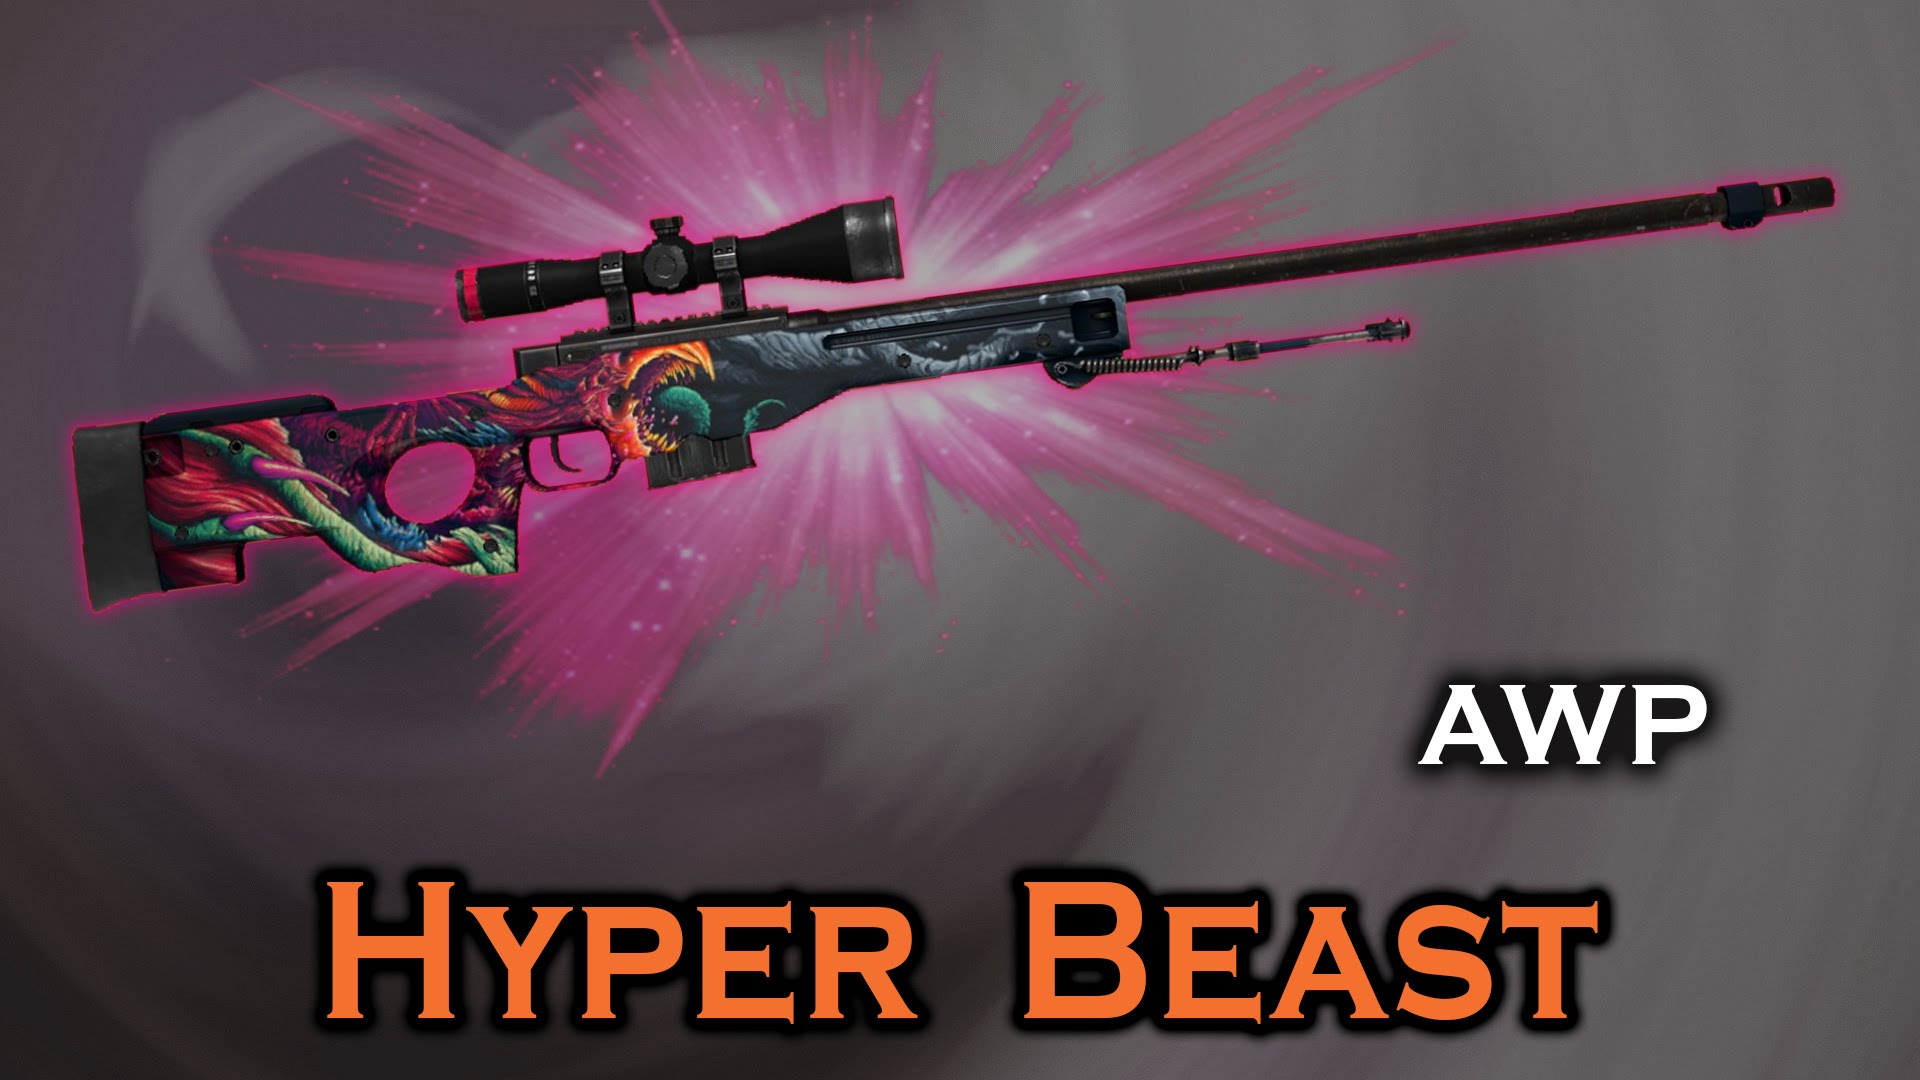 Hyperx beast awp цена фото 47